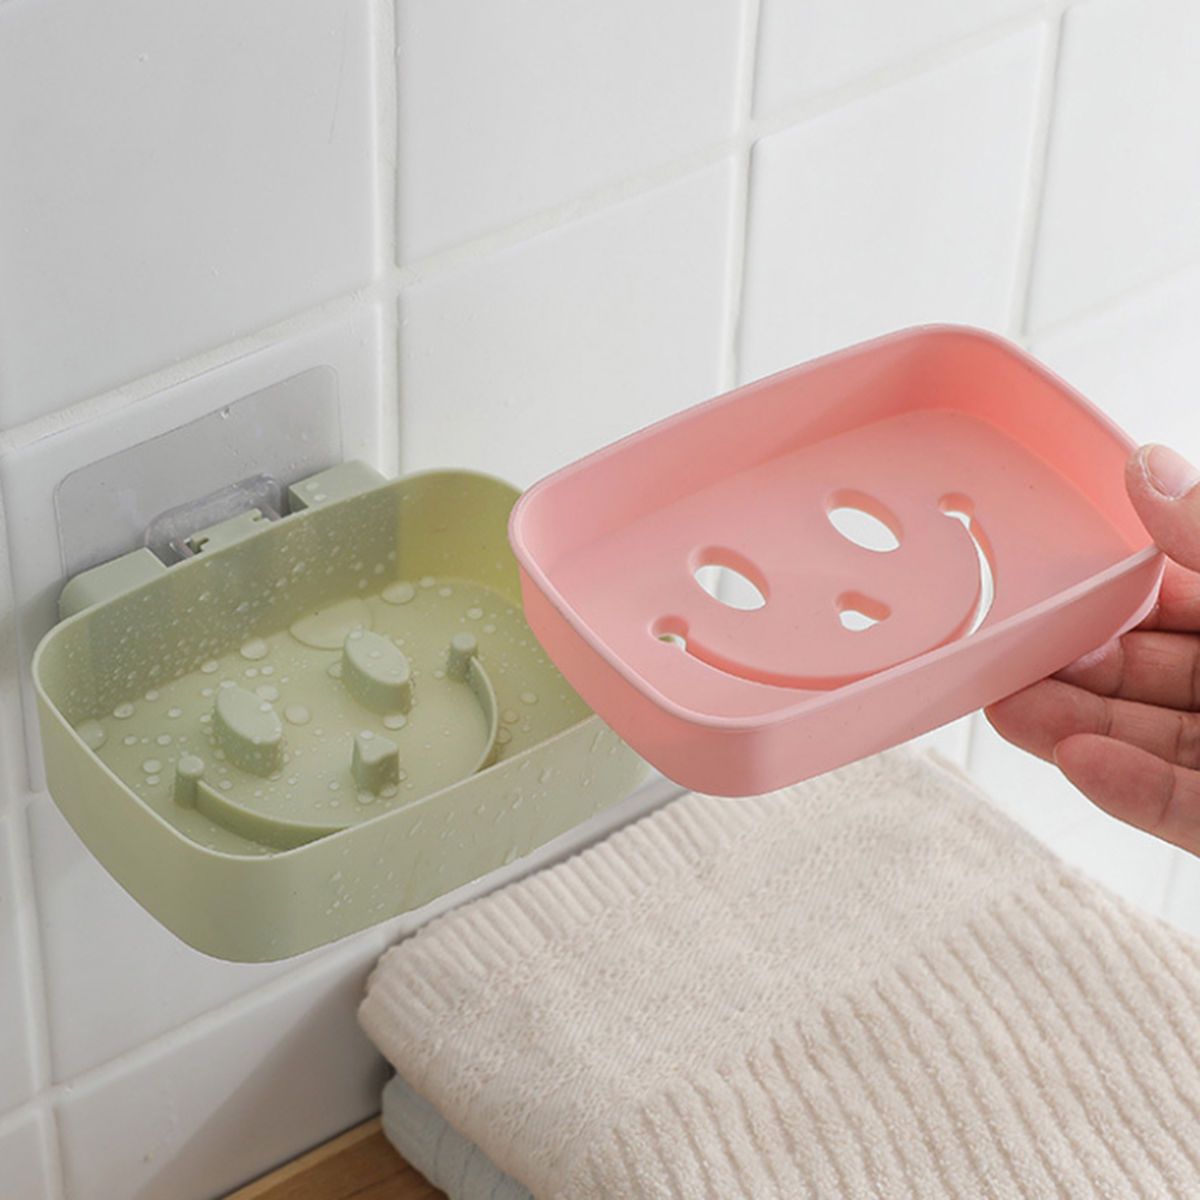 Smiling face soap box bathroom bathroom double-layer free punching drain soap box wall-mounted soap box shelf